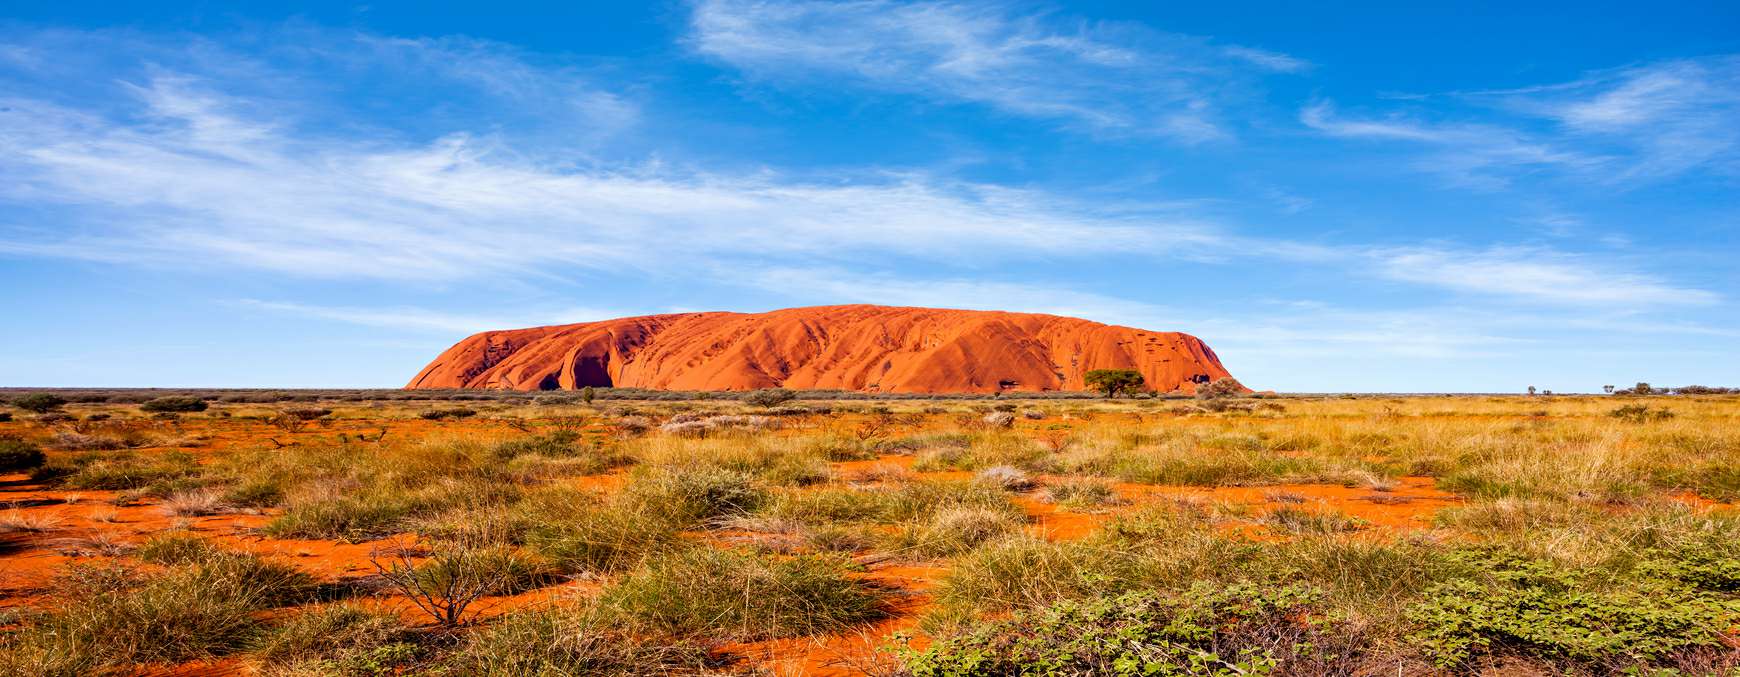 Photograph of Uluru / Northern Territory